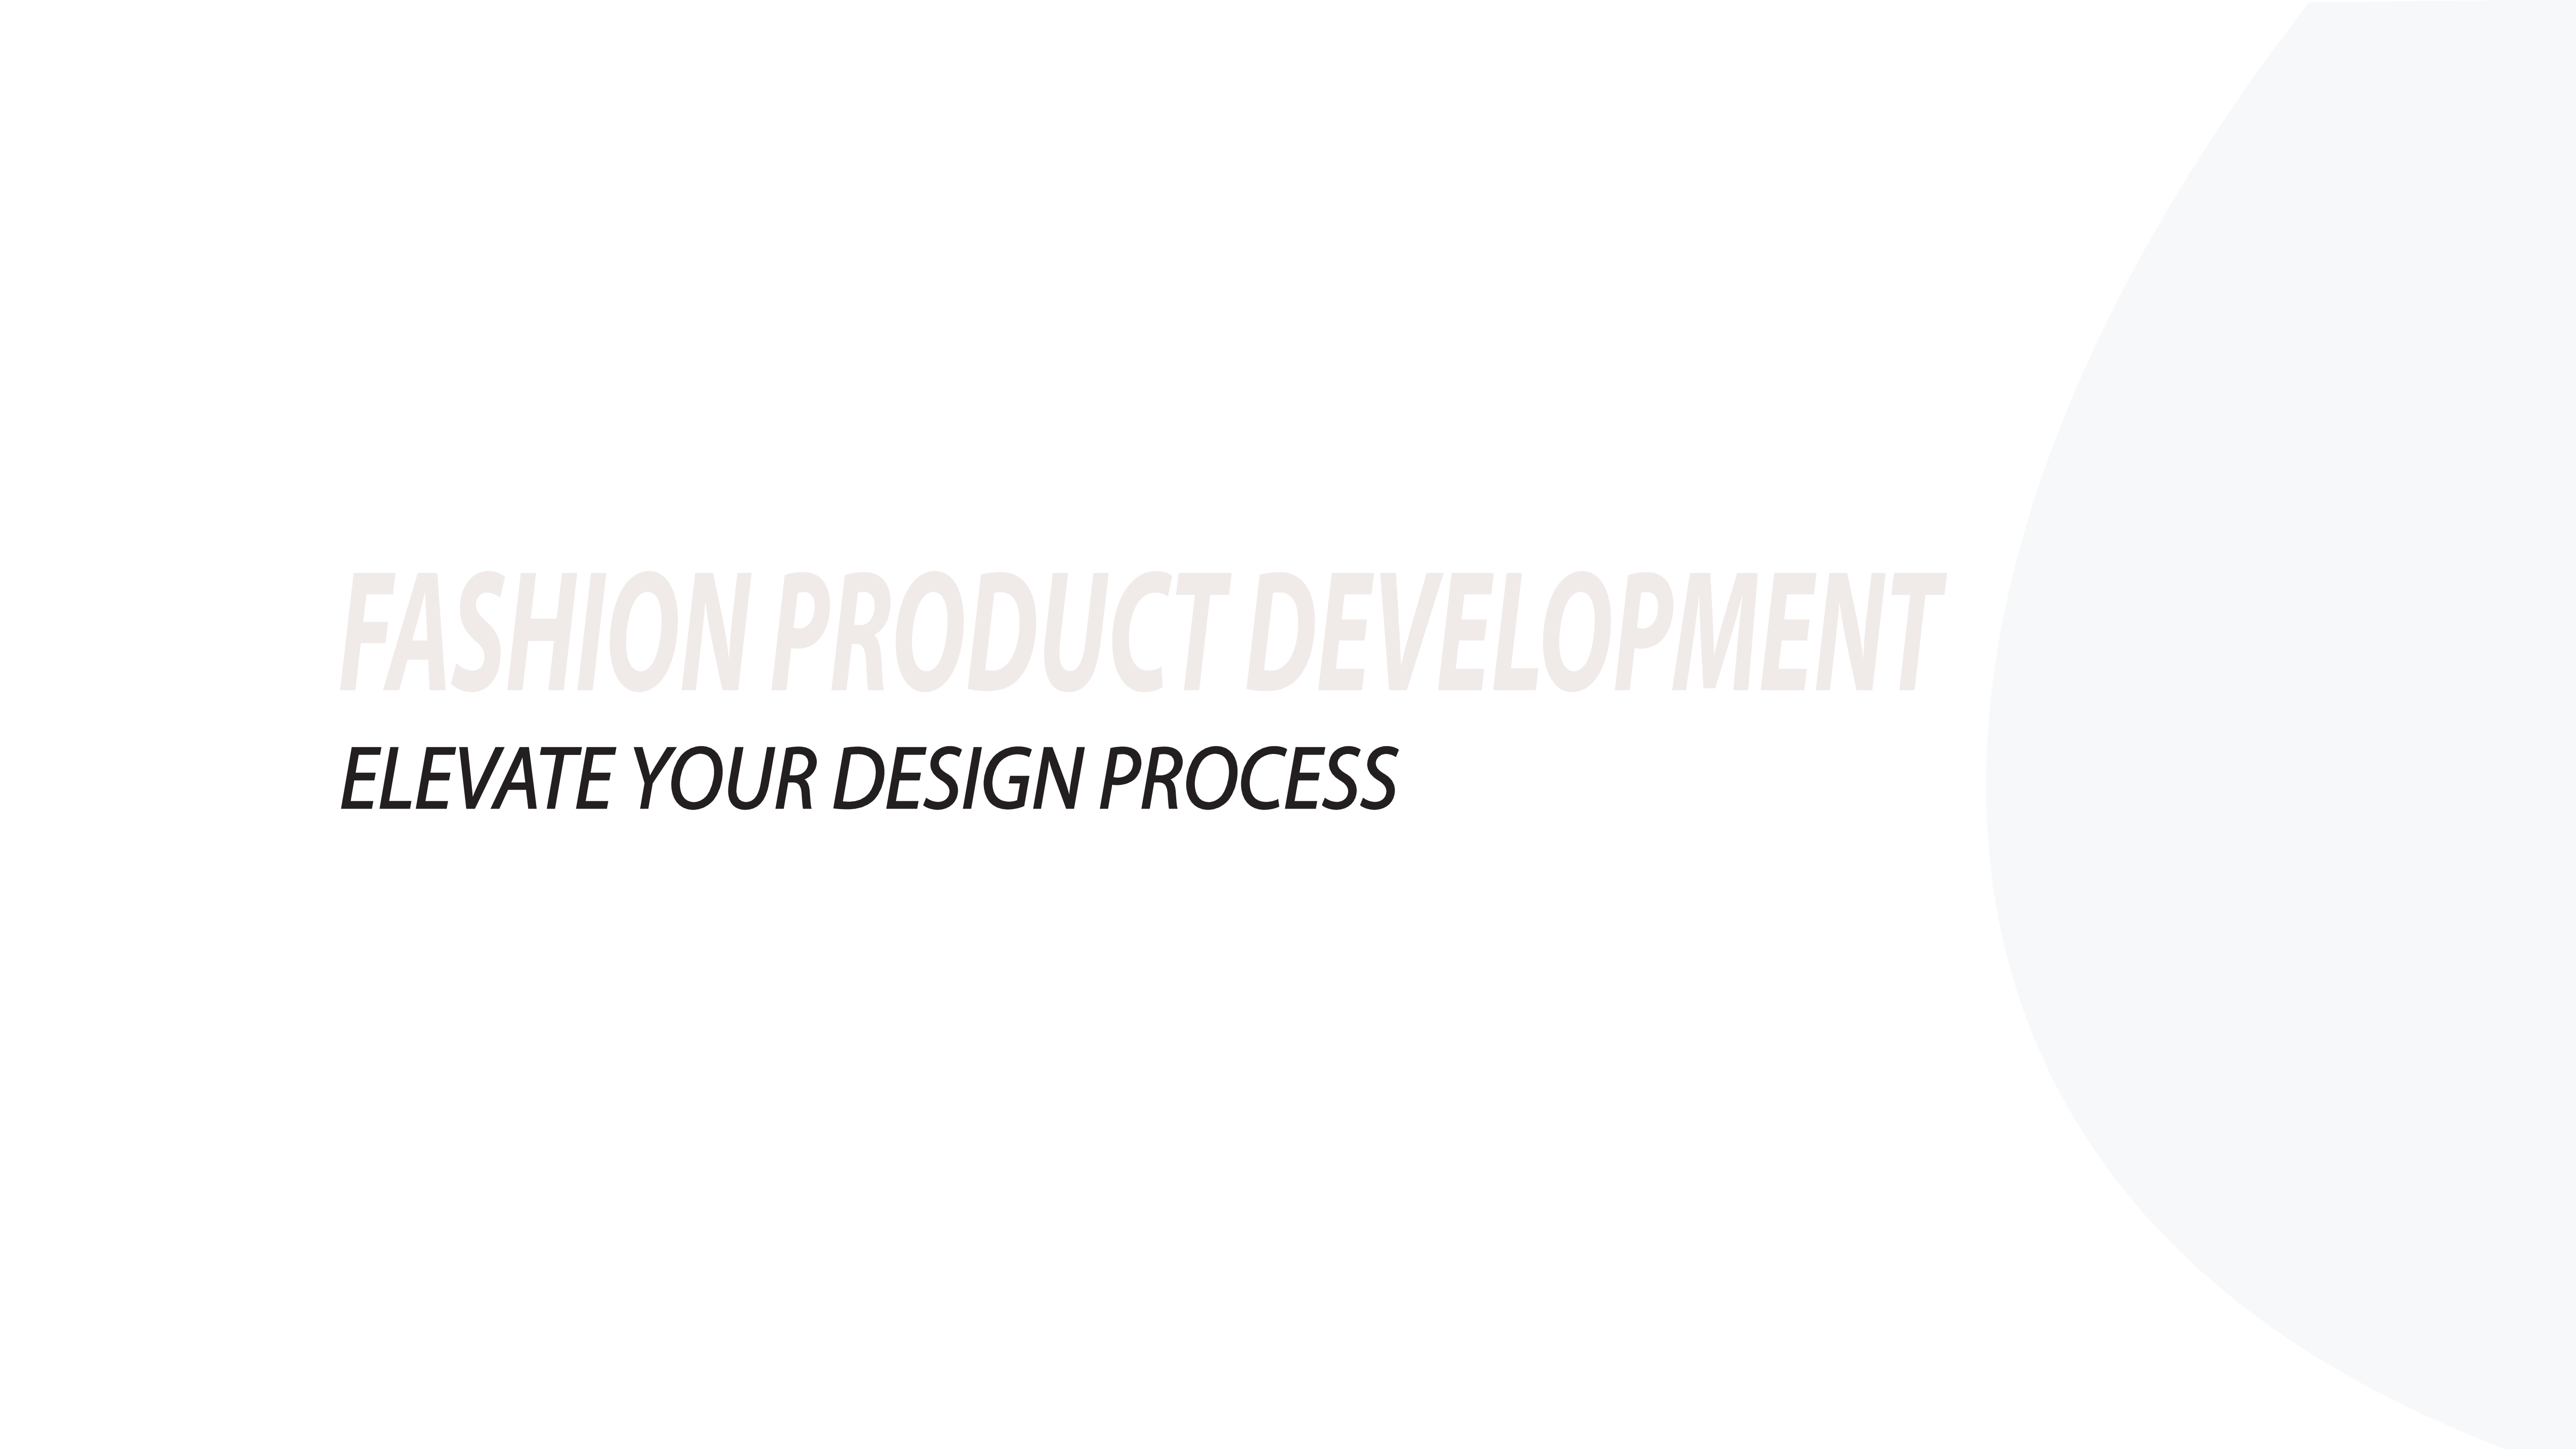 Fashion product development, elevate your design process.